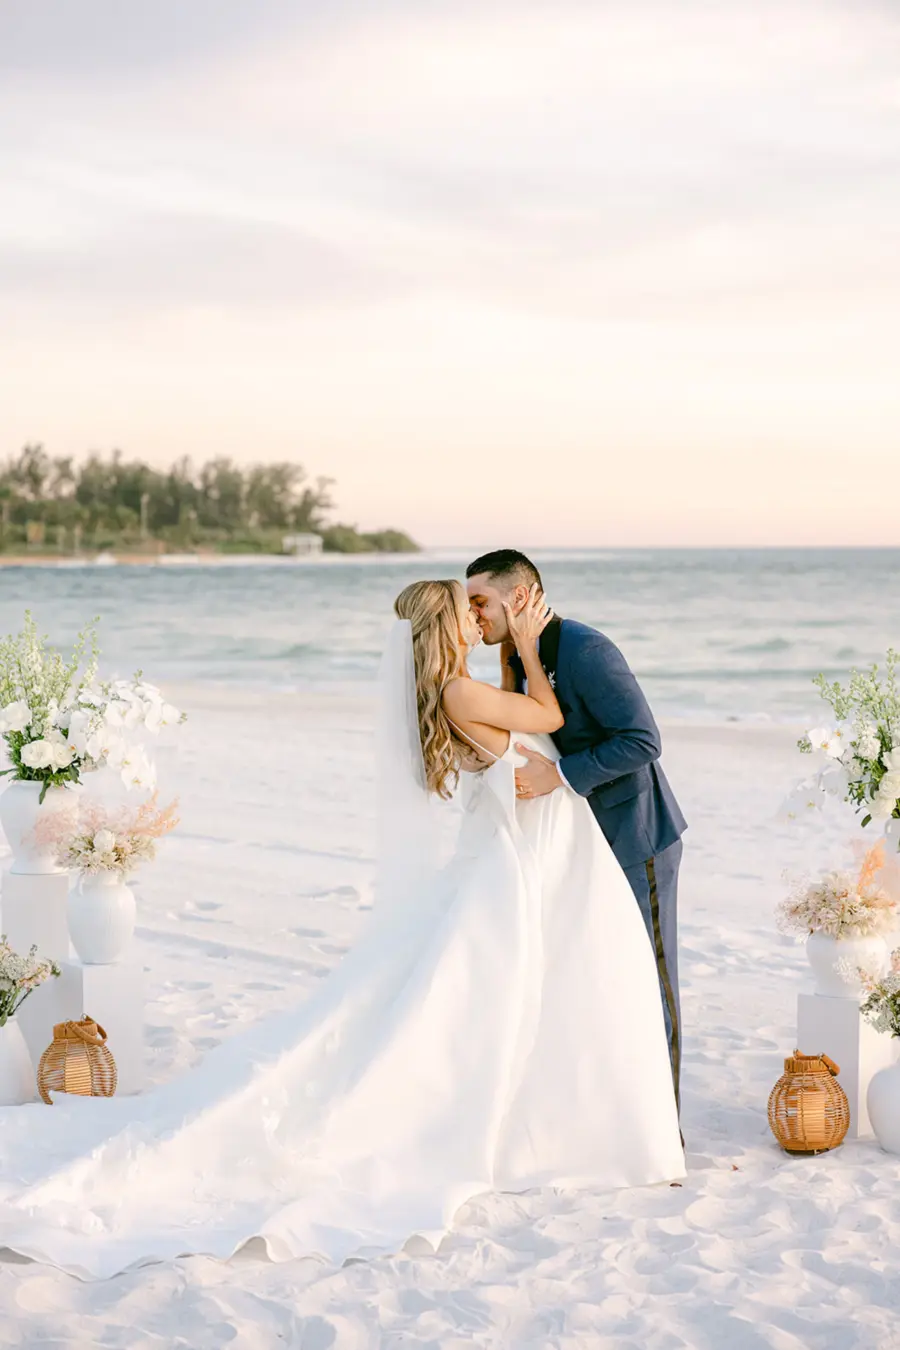 Bride and Groom First Kiss Wedding Portrait | Sarasota Waterfront Beach Venue The Resort at Longboat Key Club | Planner Elegant Affairs by Design